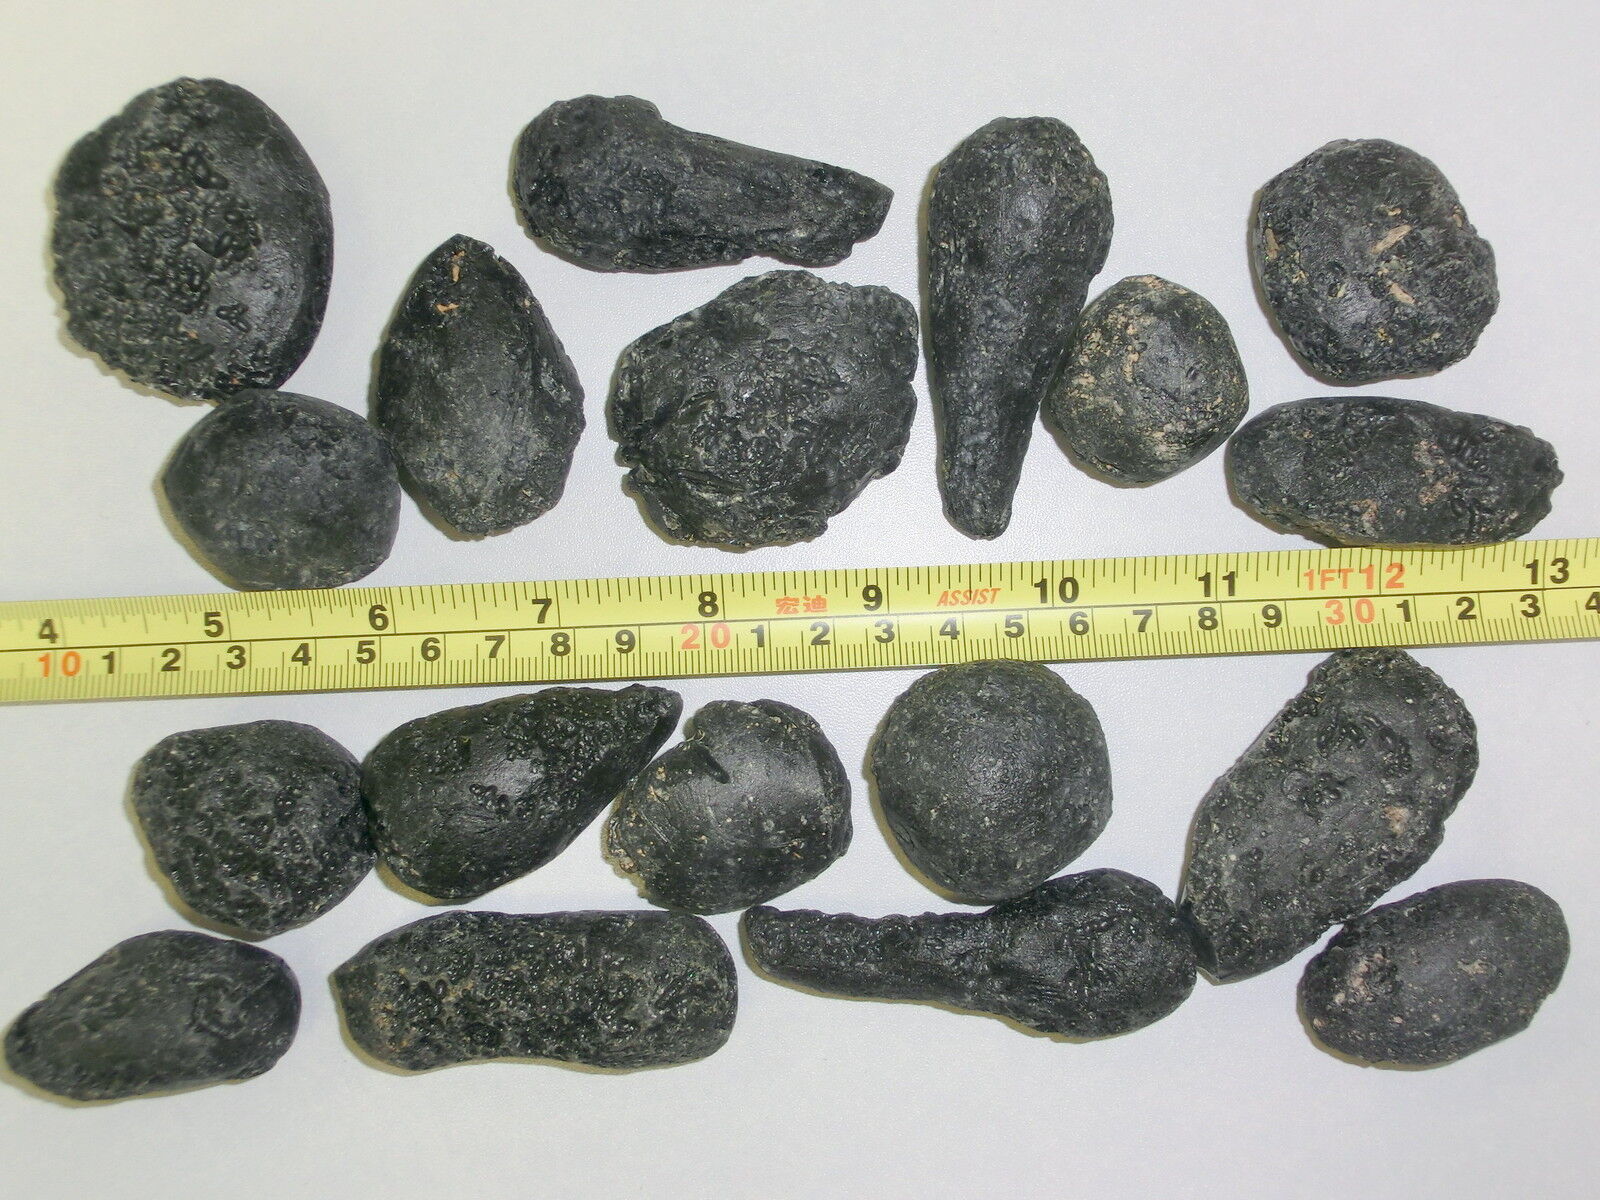 Black Indochinite Tektite Stone 15 g - 50 gram Size Pcs 50 Pieces Lot